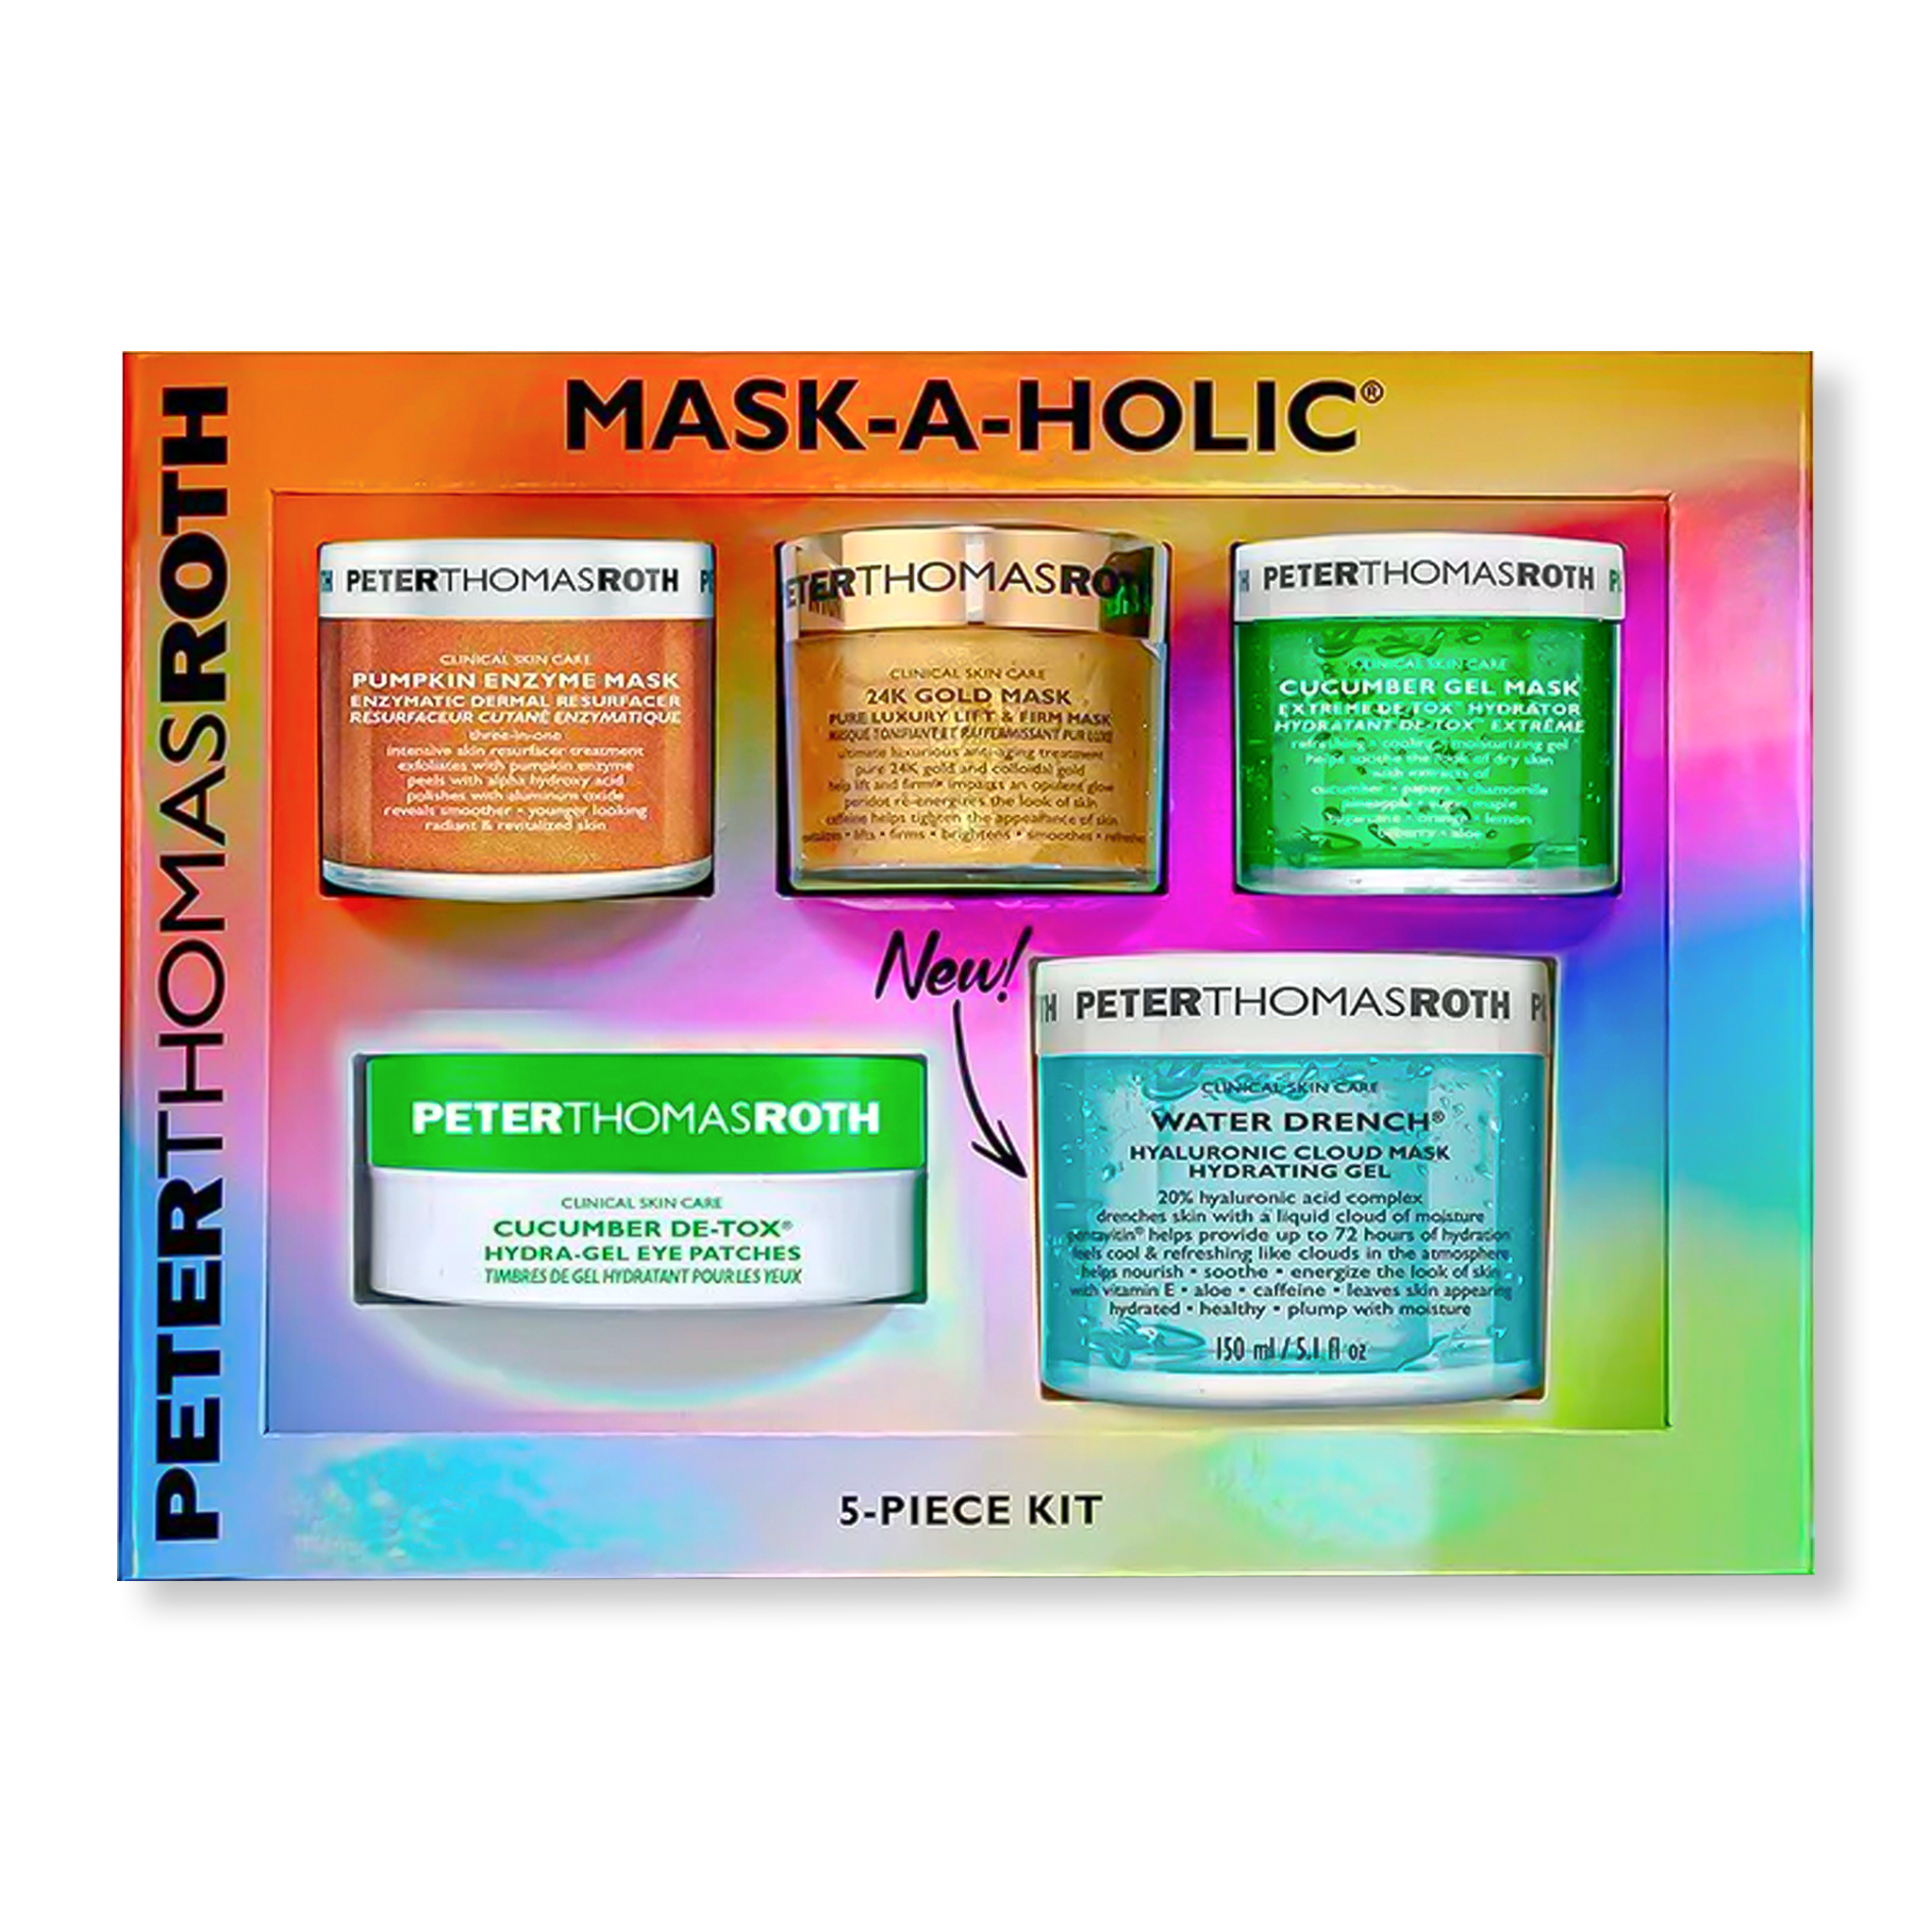 Peter Thomas Roth Mask-a-holic 5 Piece Kit